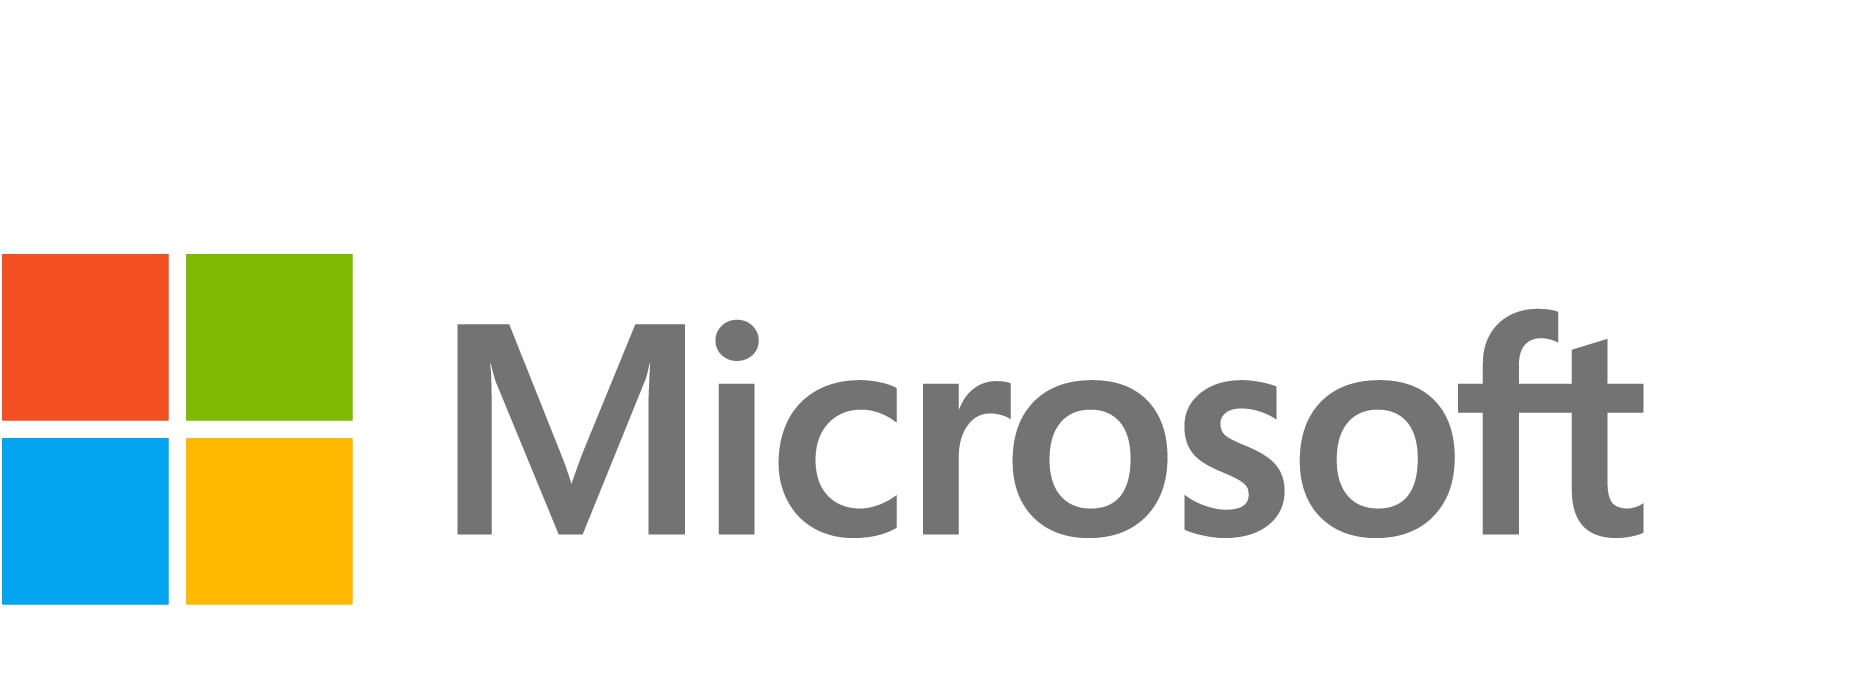 Microsoft Visual Studio Enterprise with MSDN - license & software assurance - 1 license